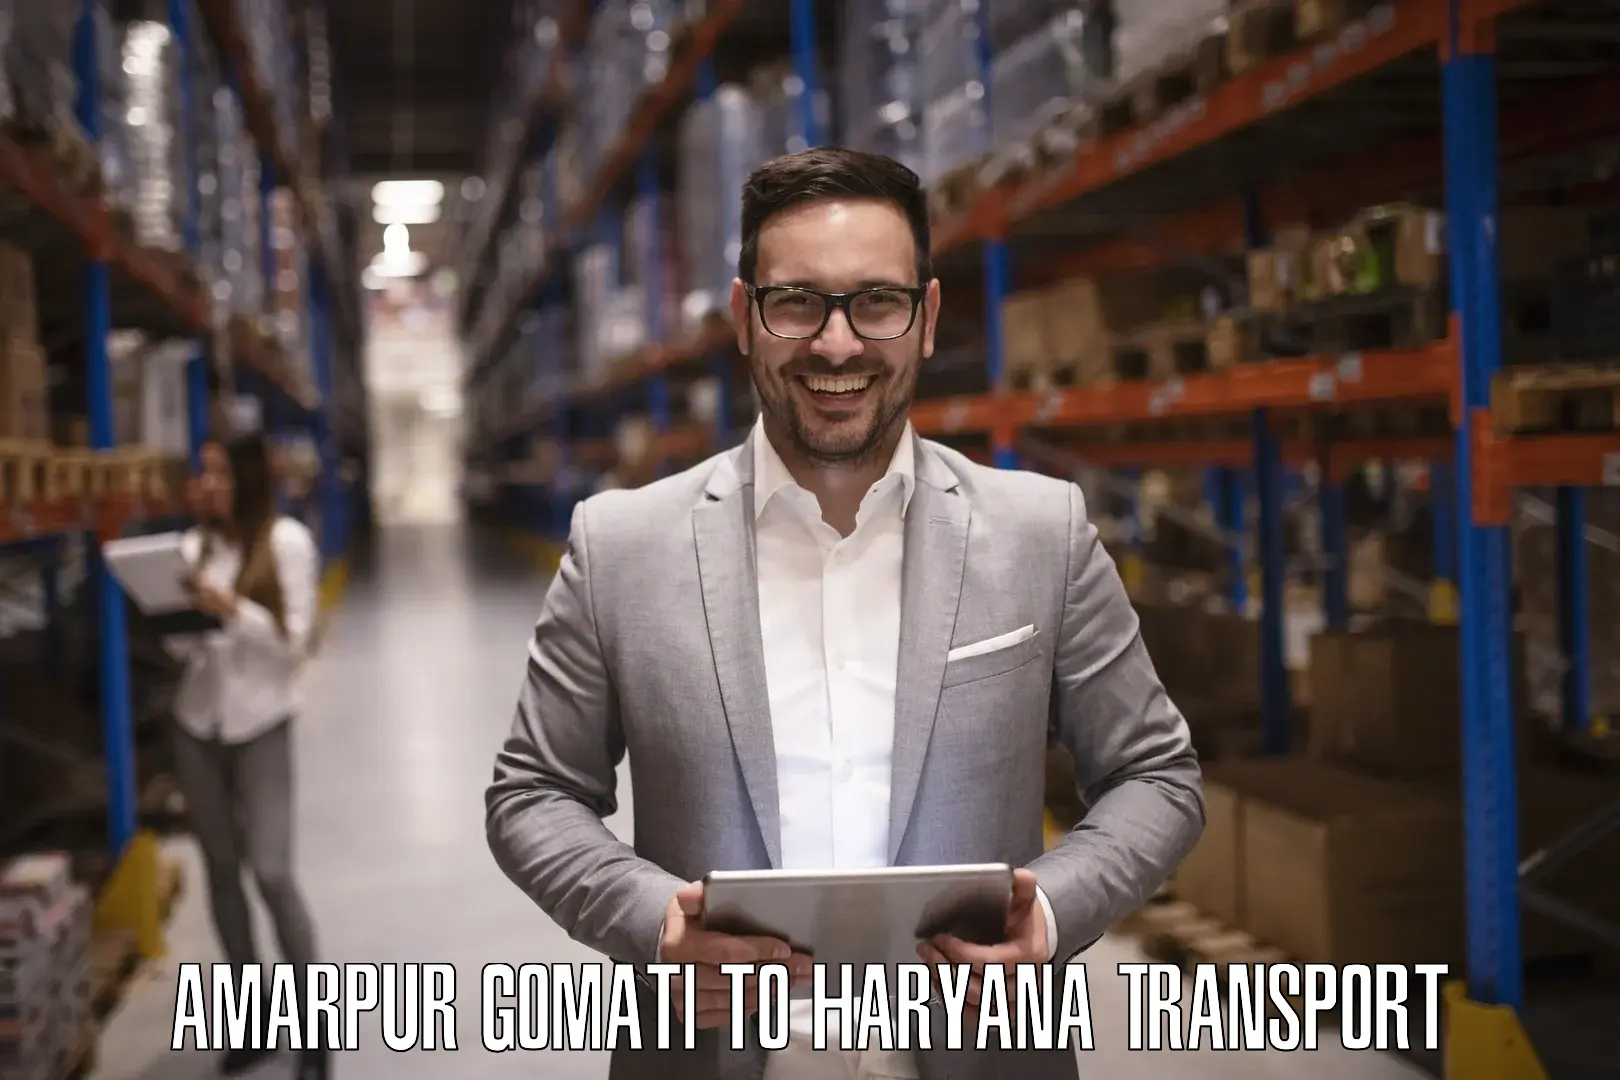 Goods delivery service Amarpur Gomati to Haryana